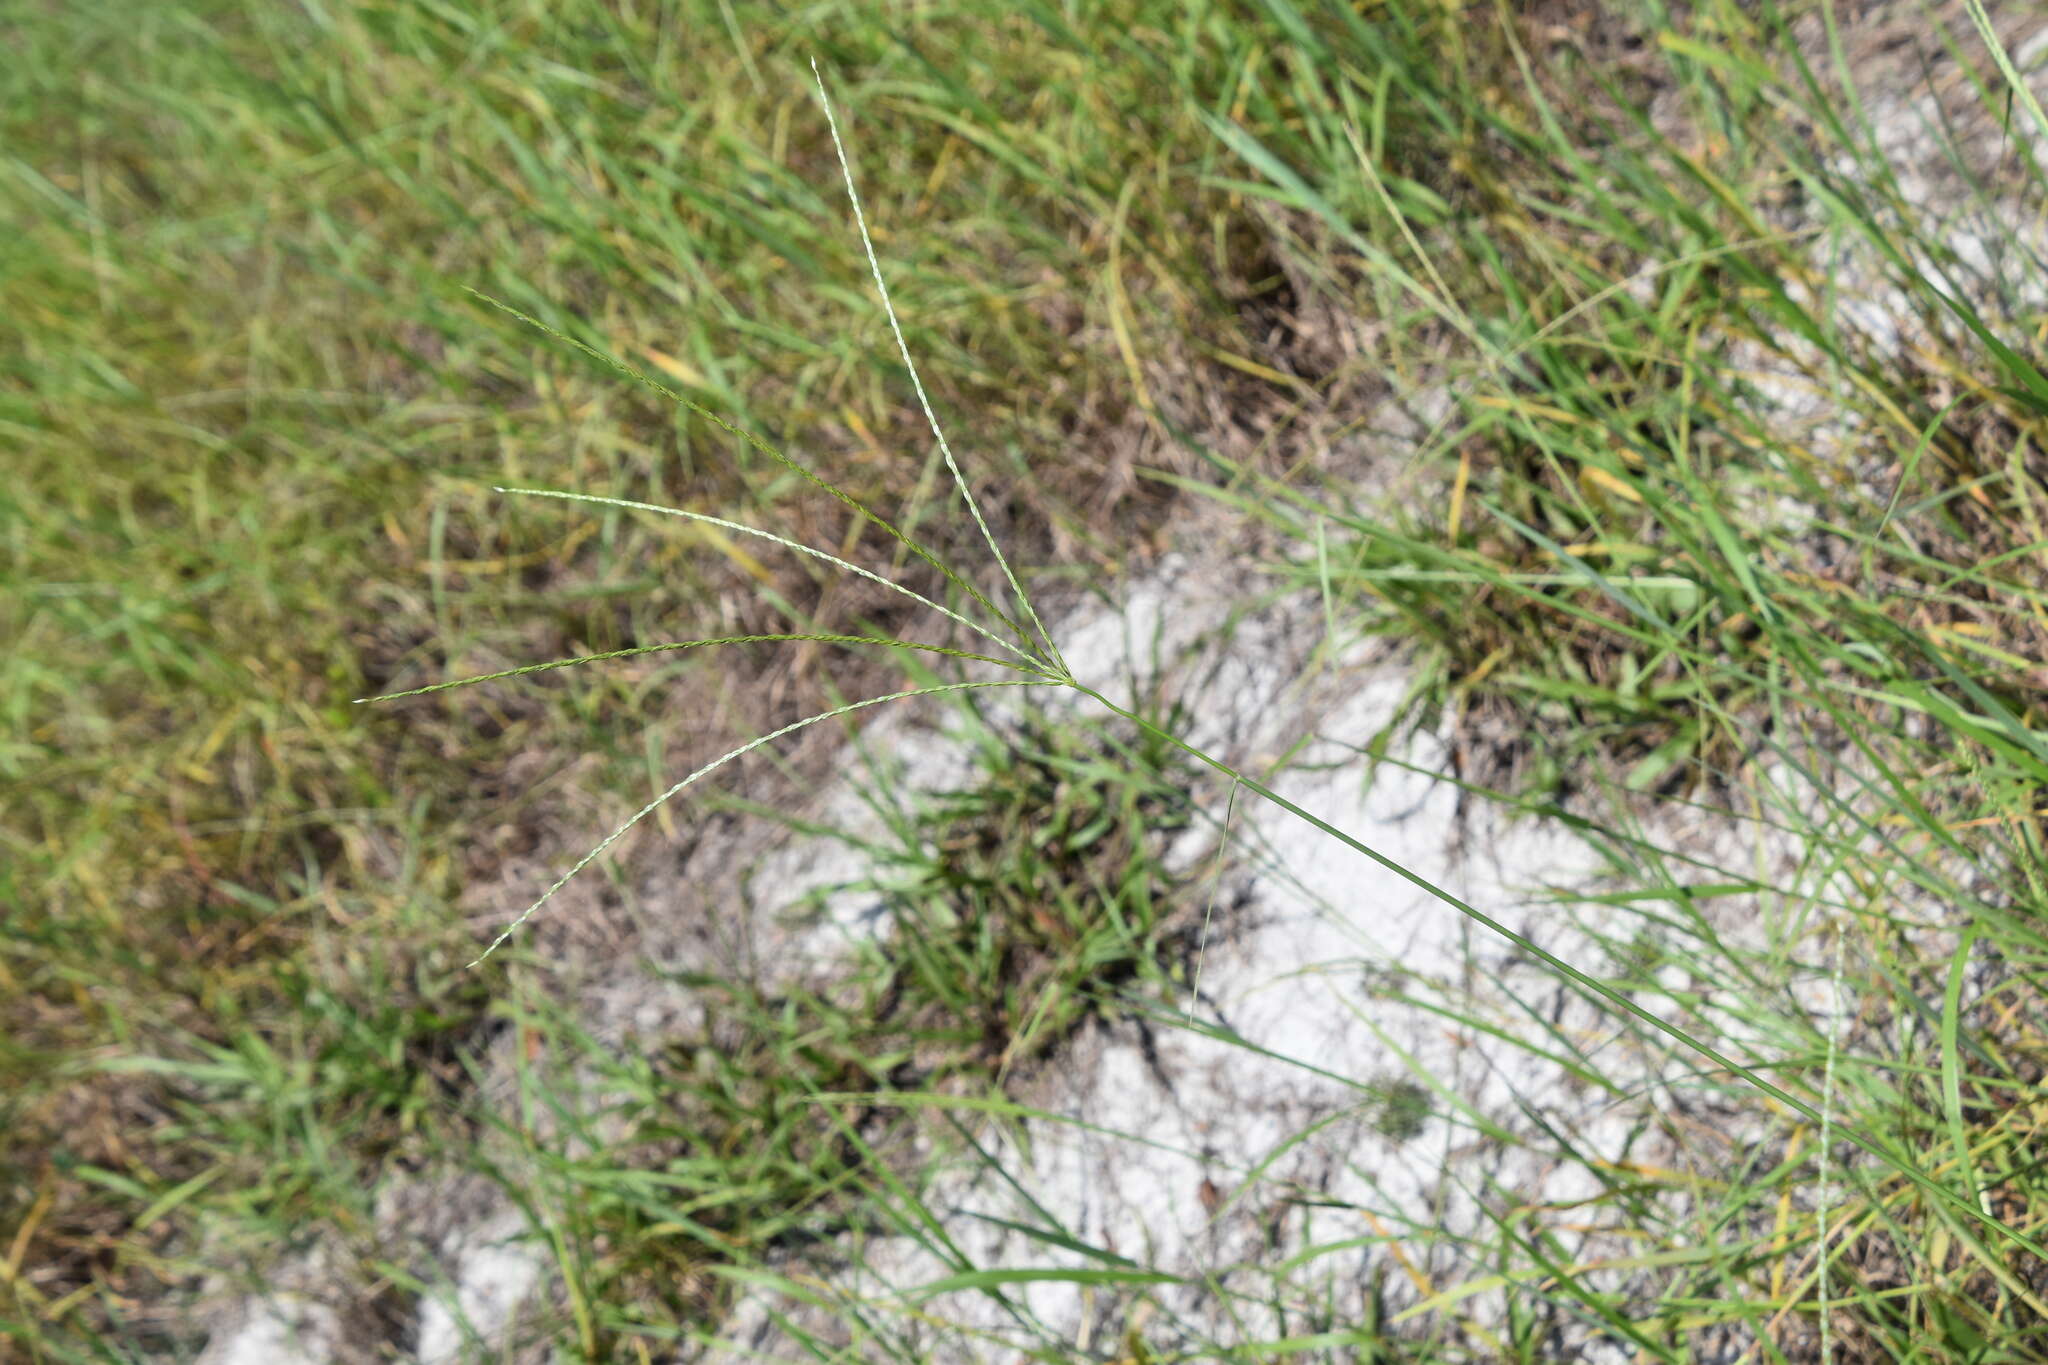 Image of Dwarf Crab Grass